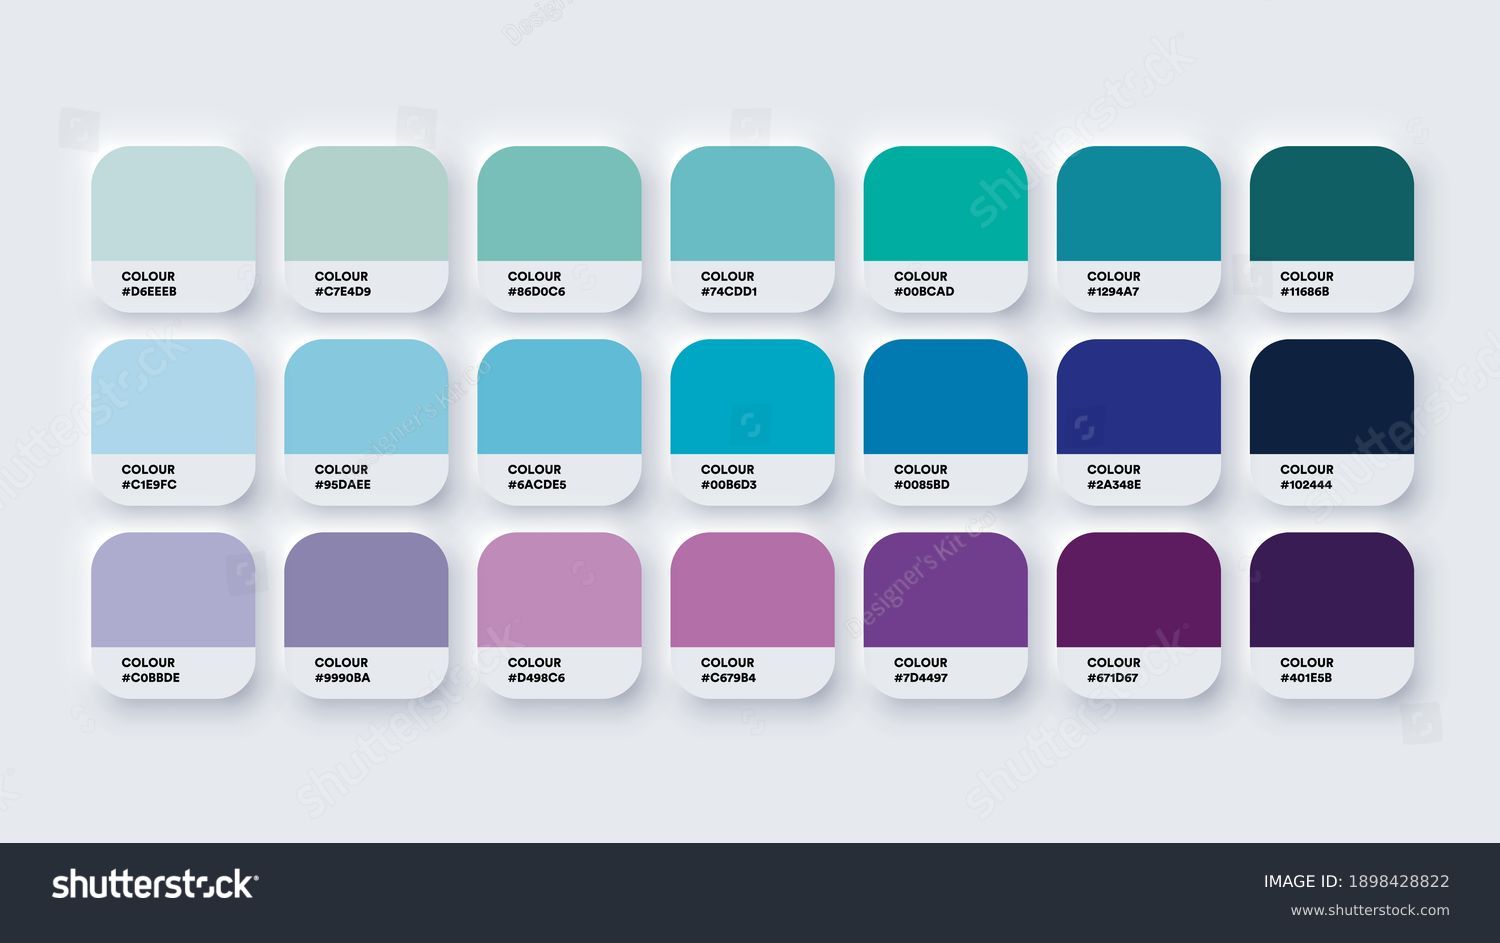 Pantone Colour Guide Palette Catalog Samples Royalty Free Stock Vector 1898428822